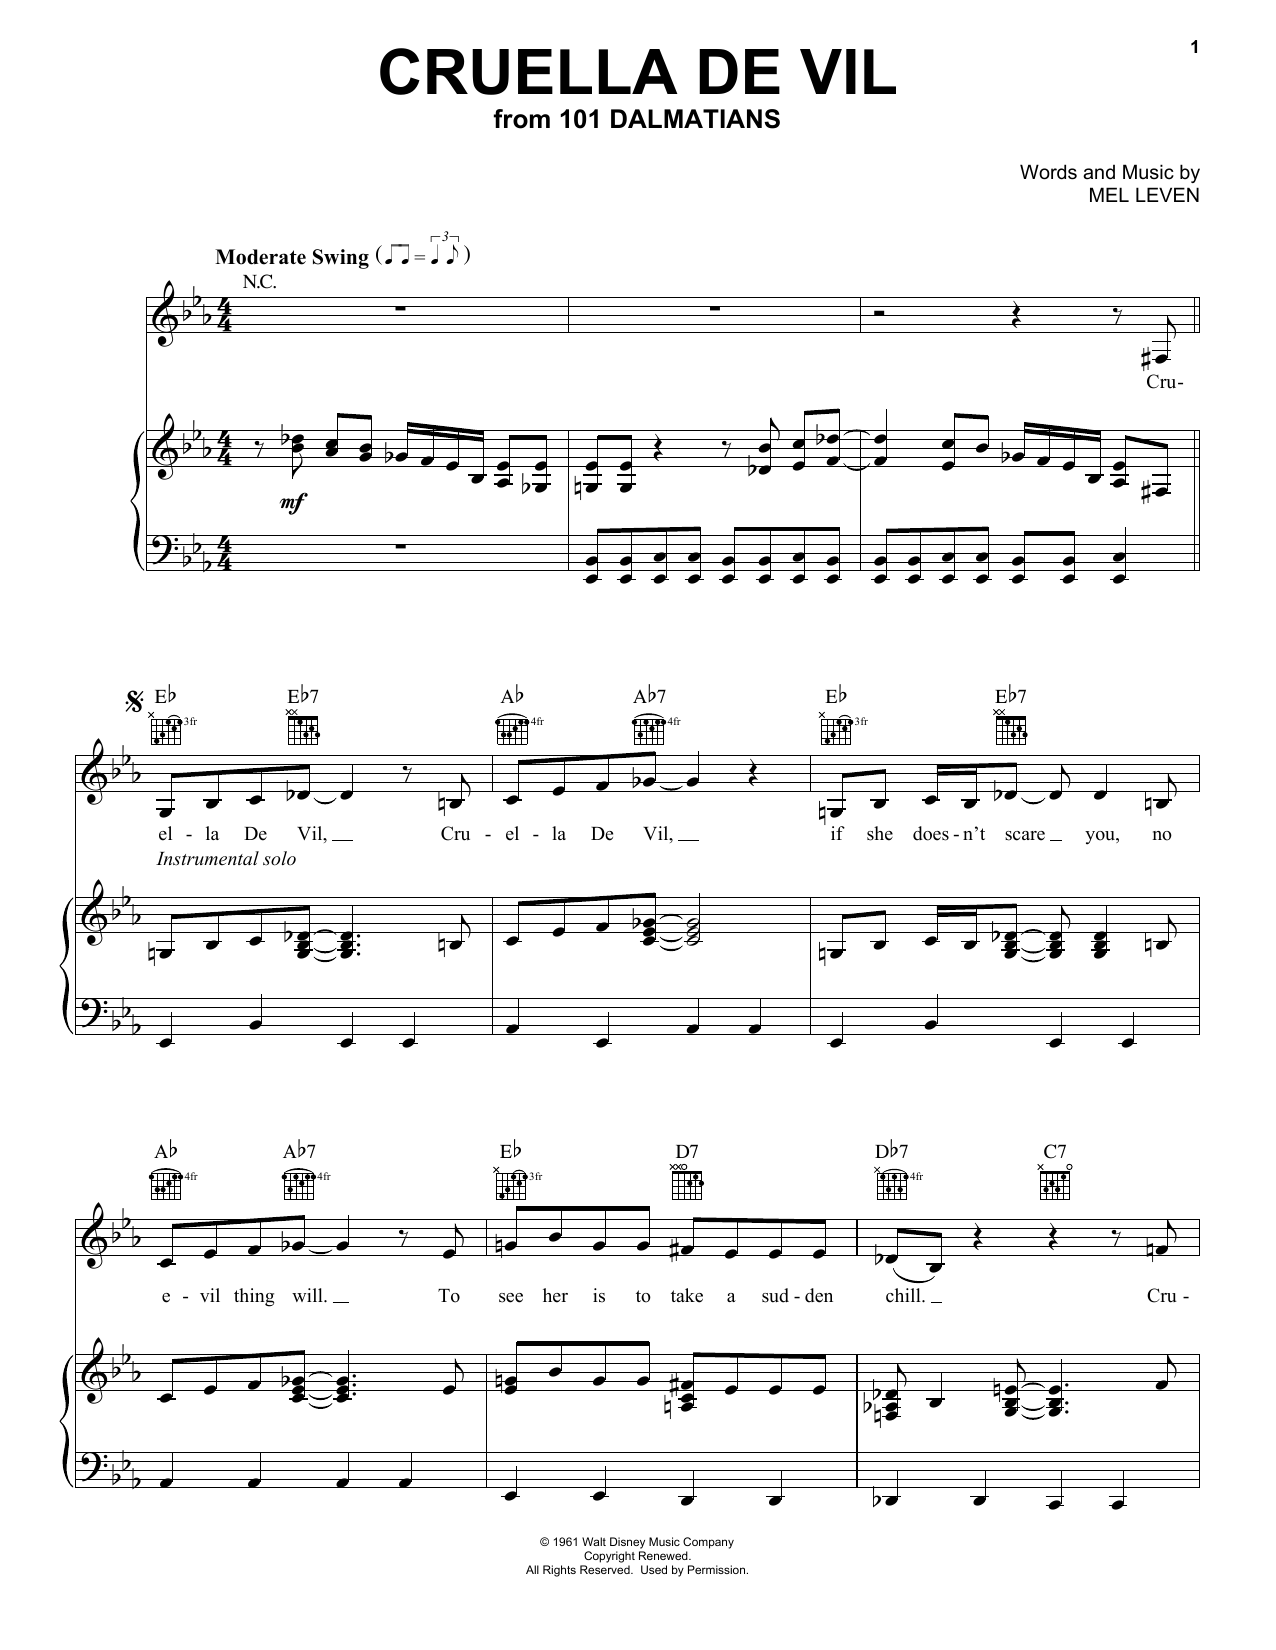 Download Mel Leven Cruella De Vil Sheet Music and learn how to play Viola PDF digital score in minutes